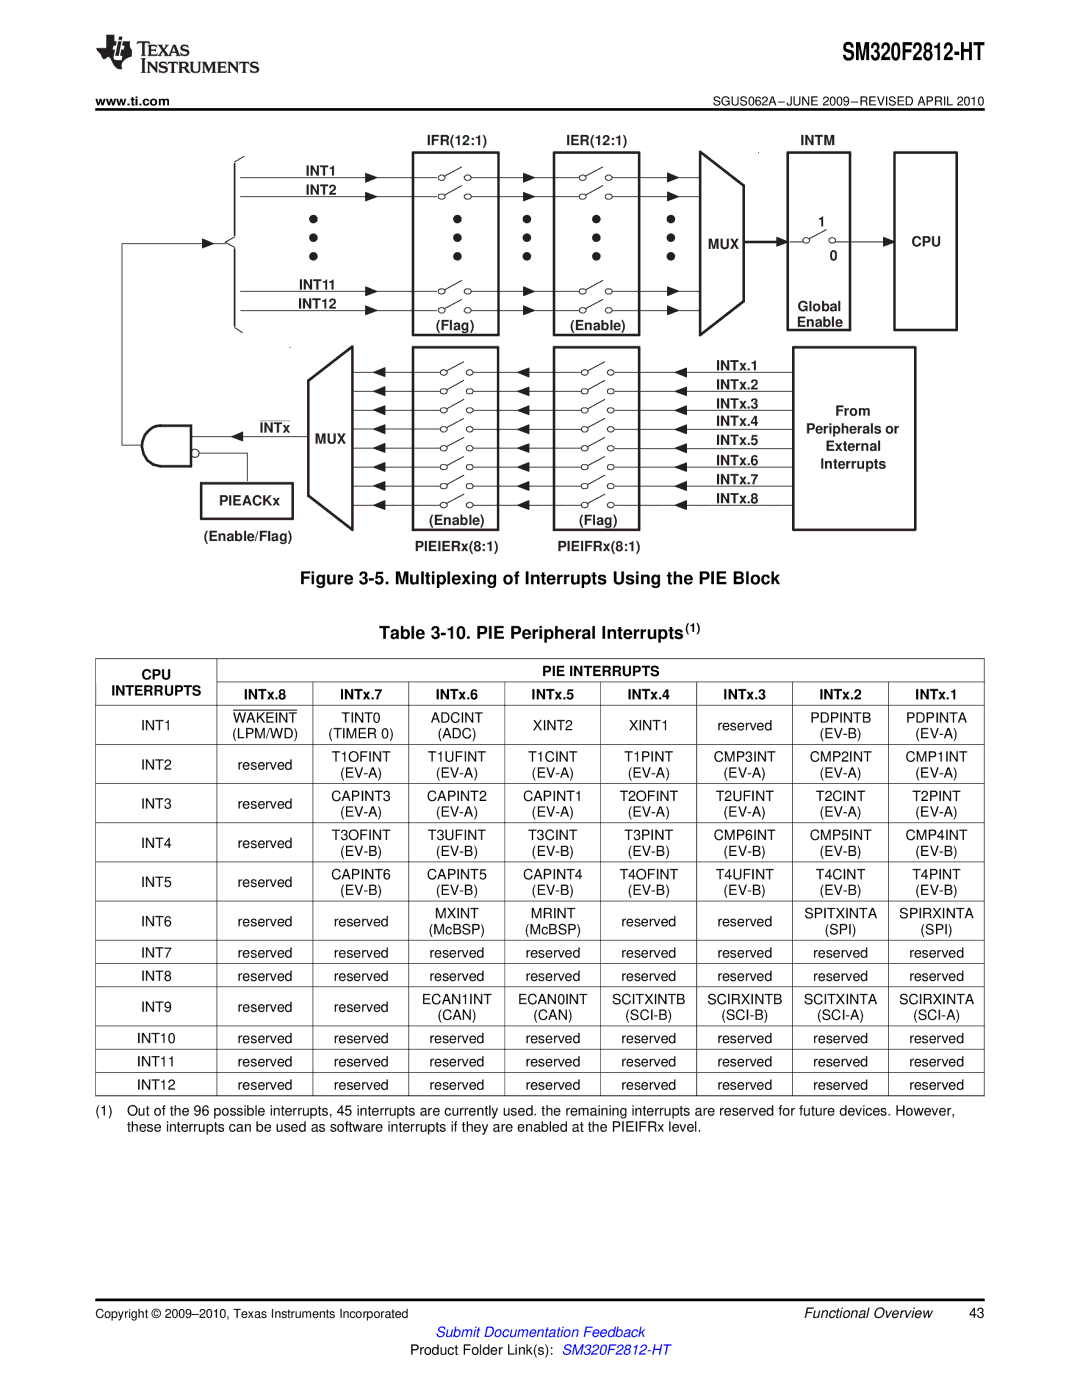 Texas Instruments SM320F2812-HT specifications INT1 INT2 INT11 INT12, Intm, CPU PIE Interrupts 